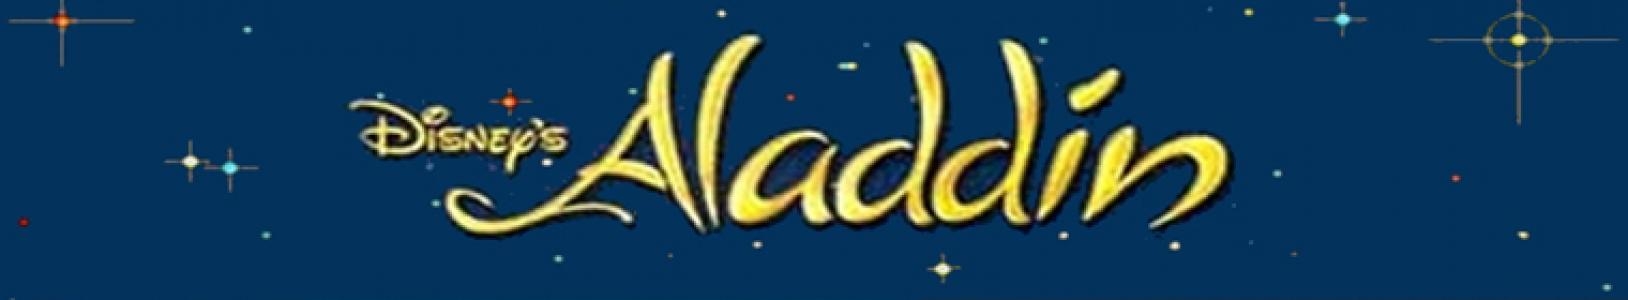 Disney's Aladdin banner